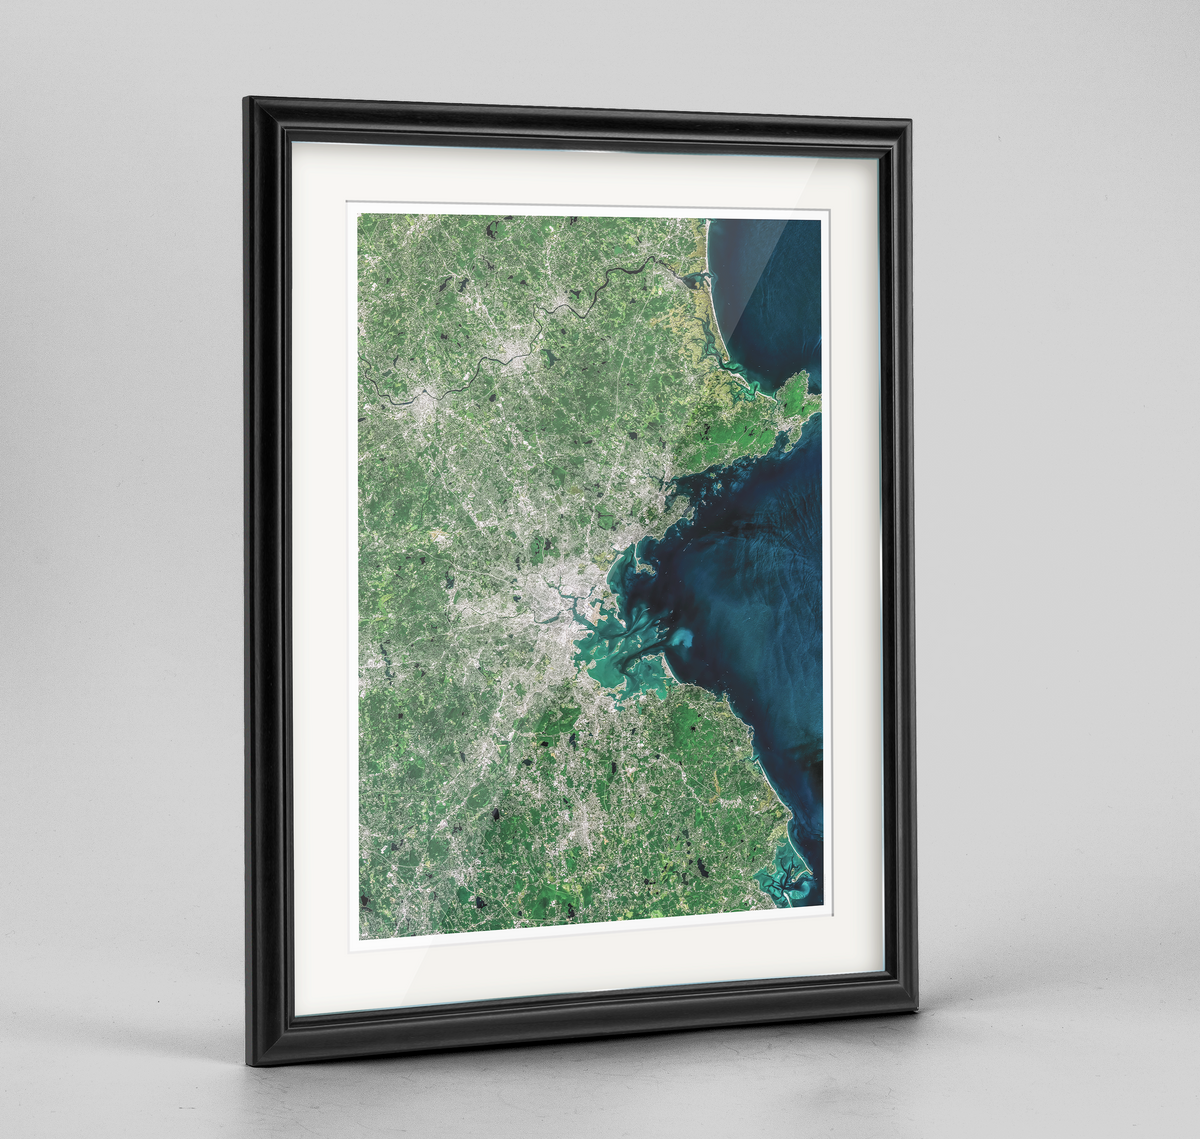 Boston Earth Photography Art Print - Framed